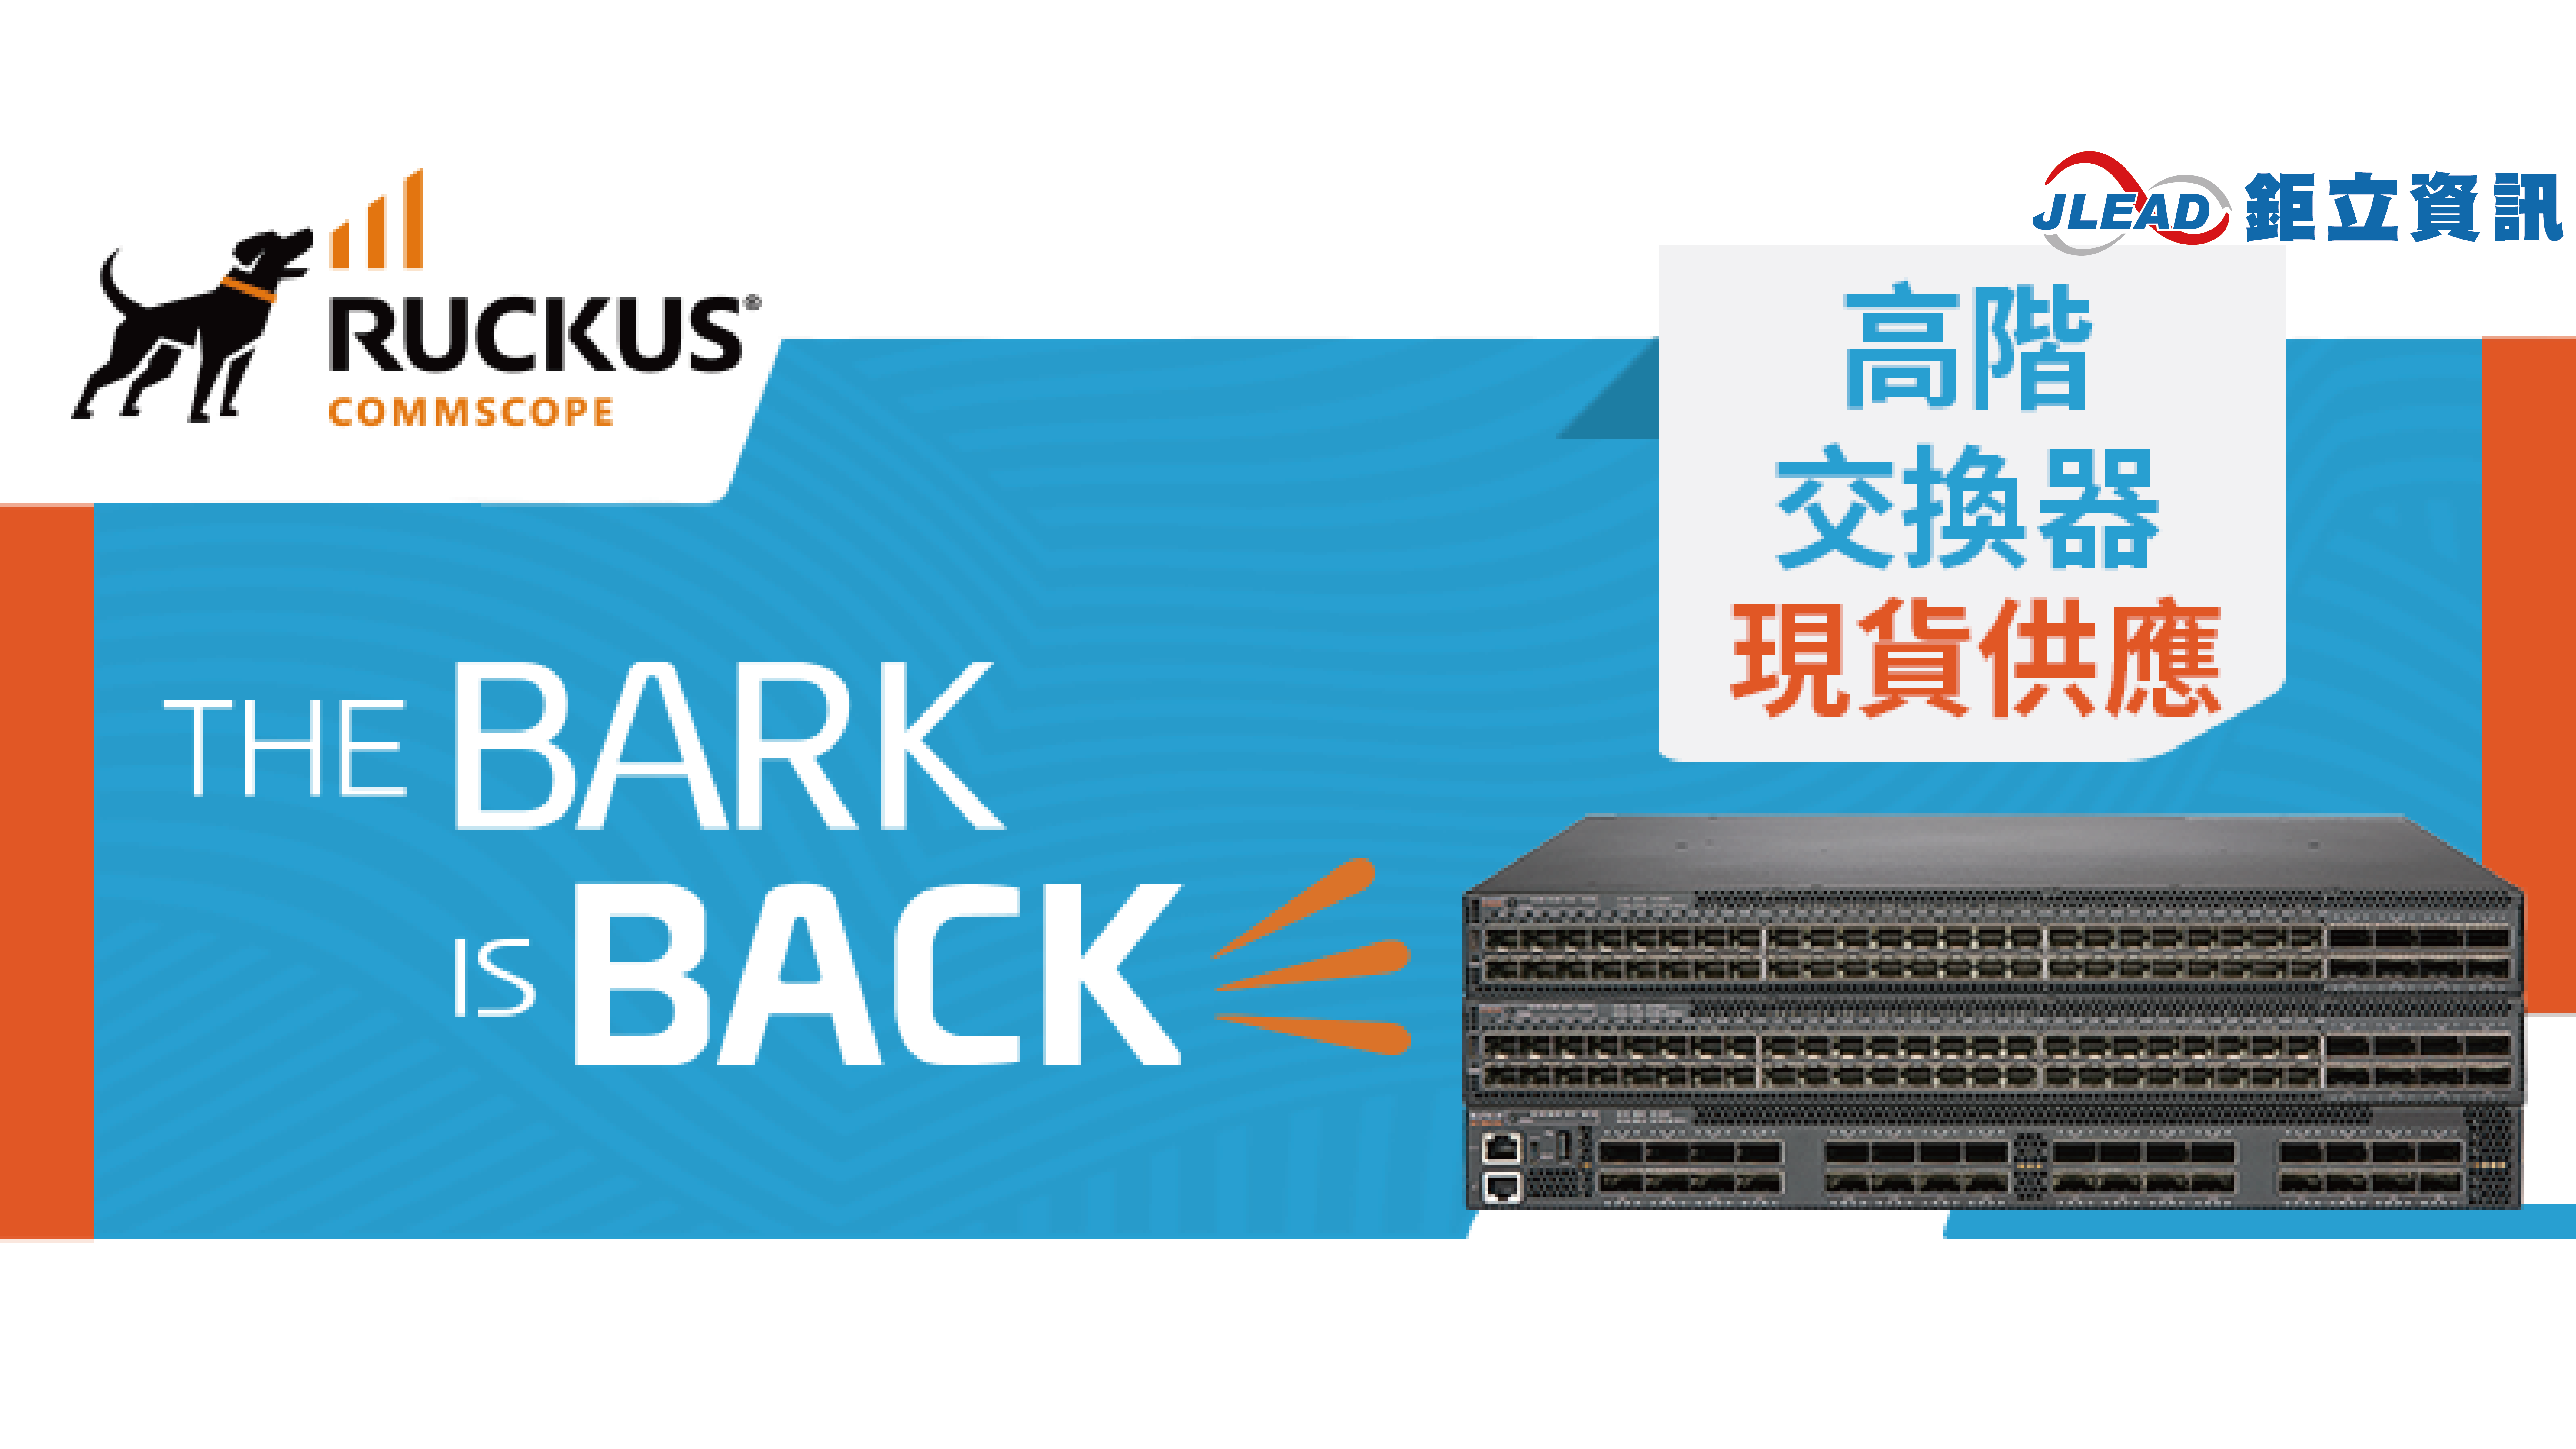 RUCKUS 高階交換器 ICX7850 現貨供應 The Bark Is Back !